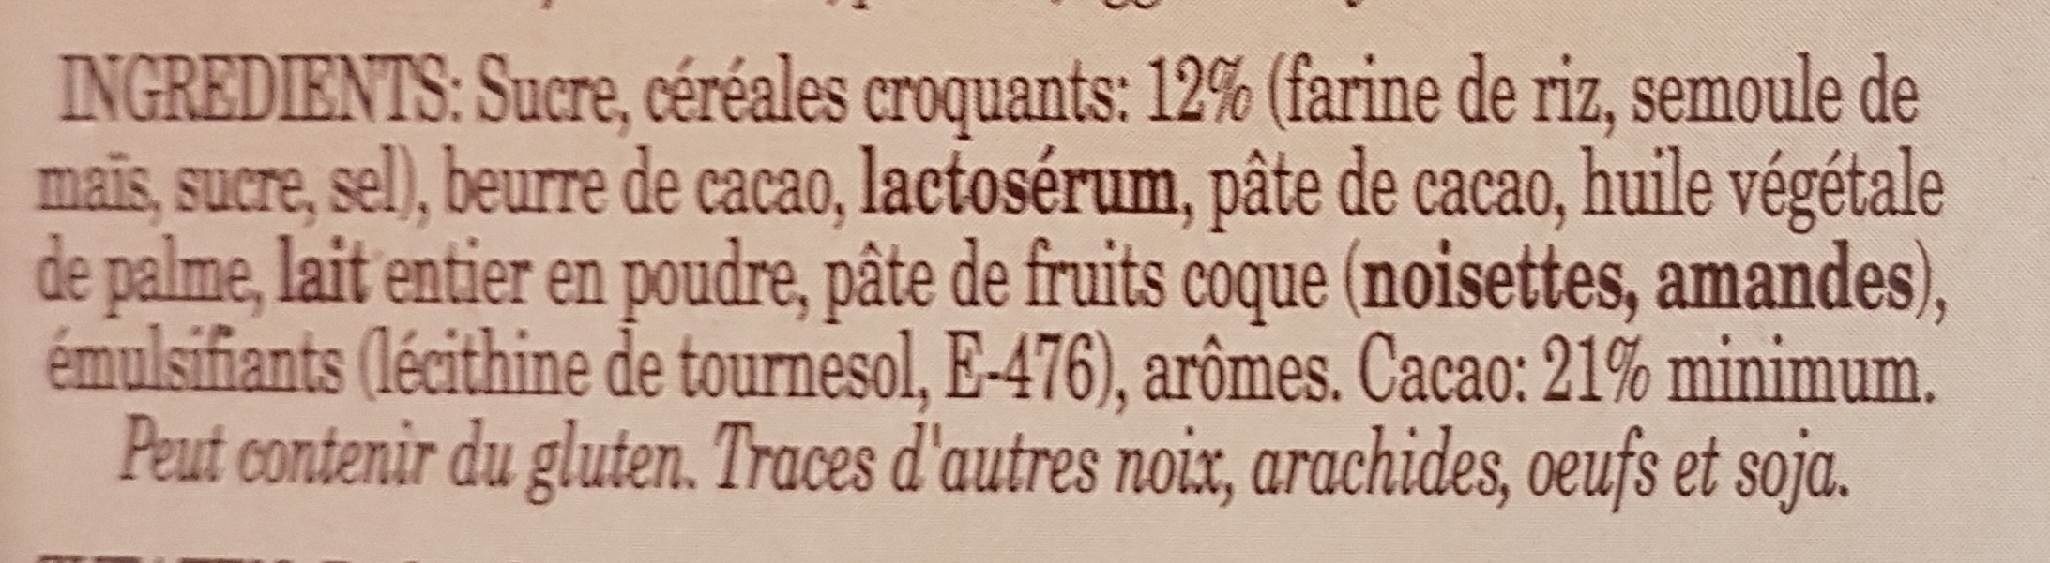 Turron de chocolate crujiente - Ingredients - fr